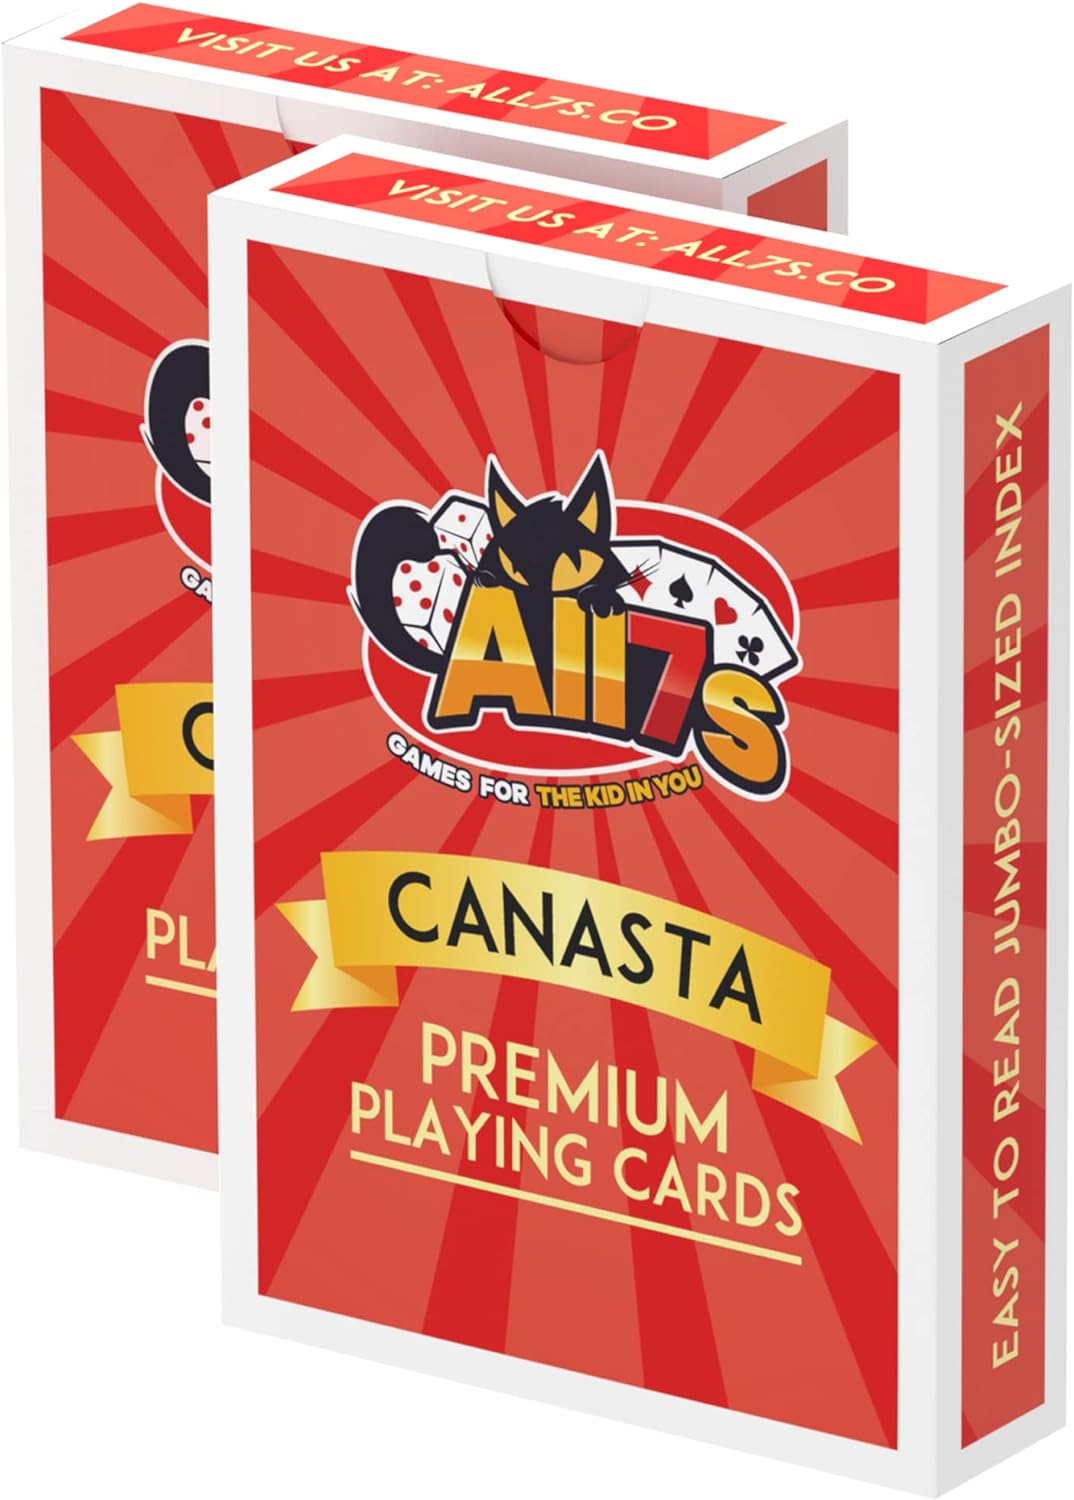 Canasta Playing Cards (2 Decks)